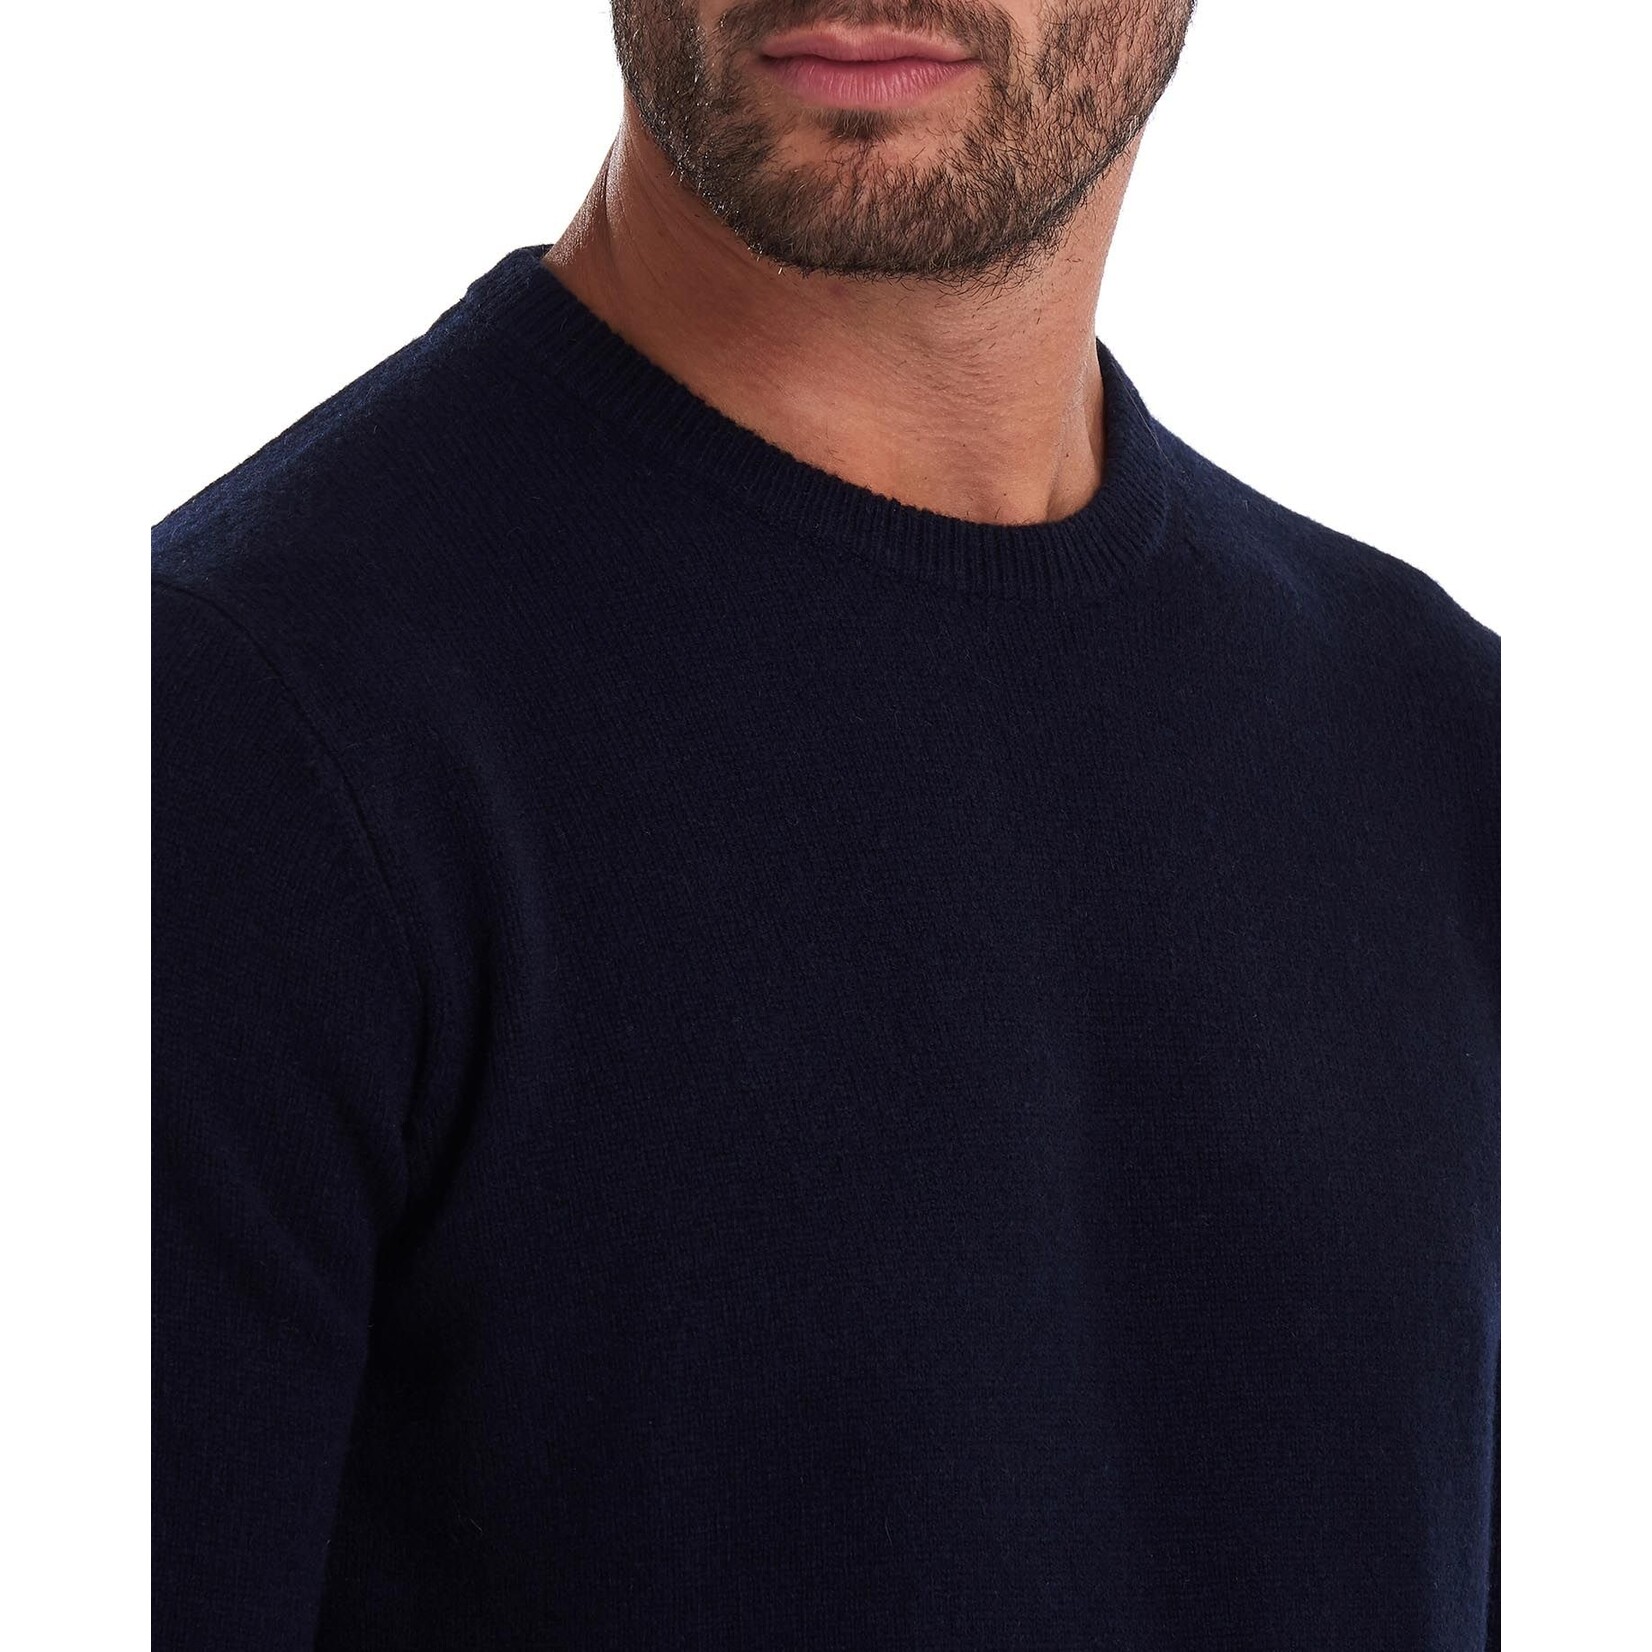 Barbour Men's Essential Pullover Patch Crew Sweater